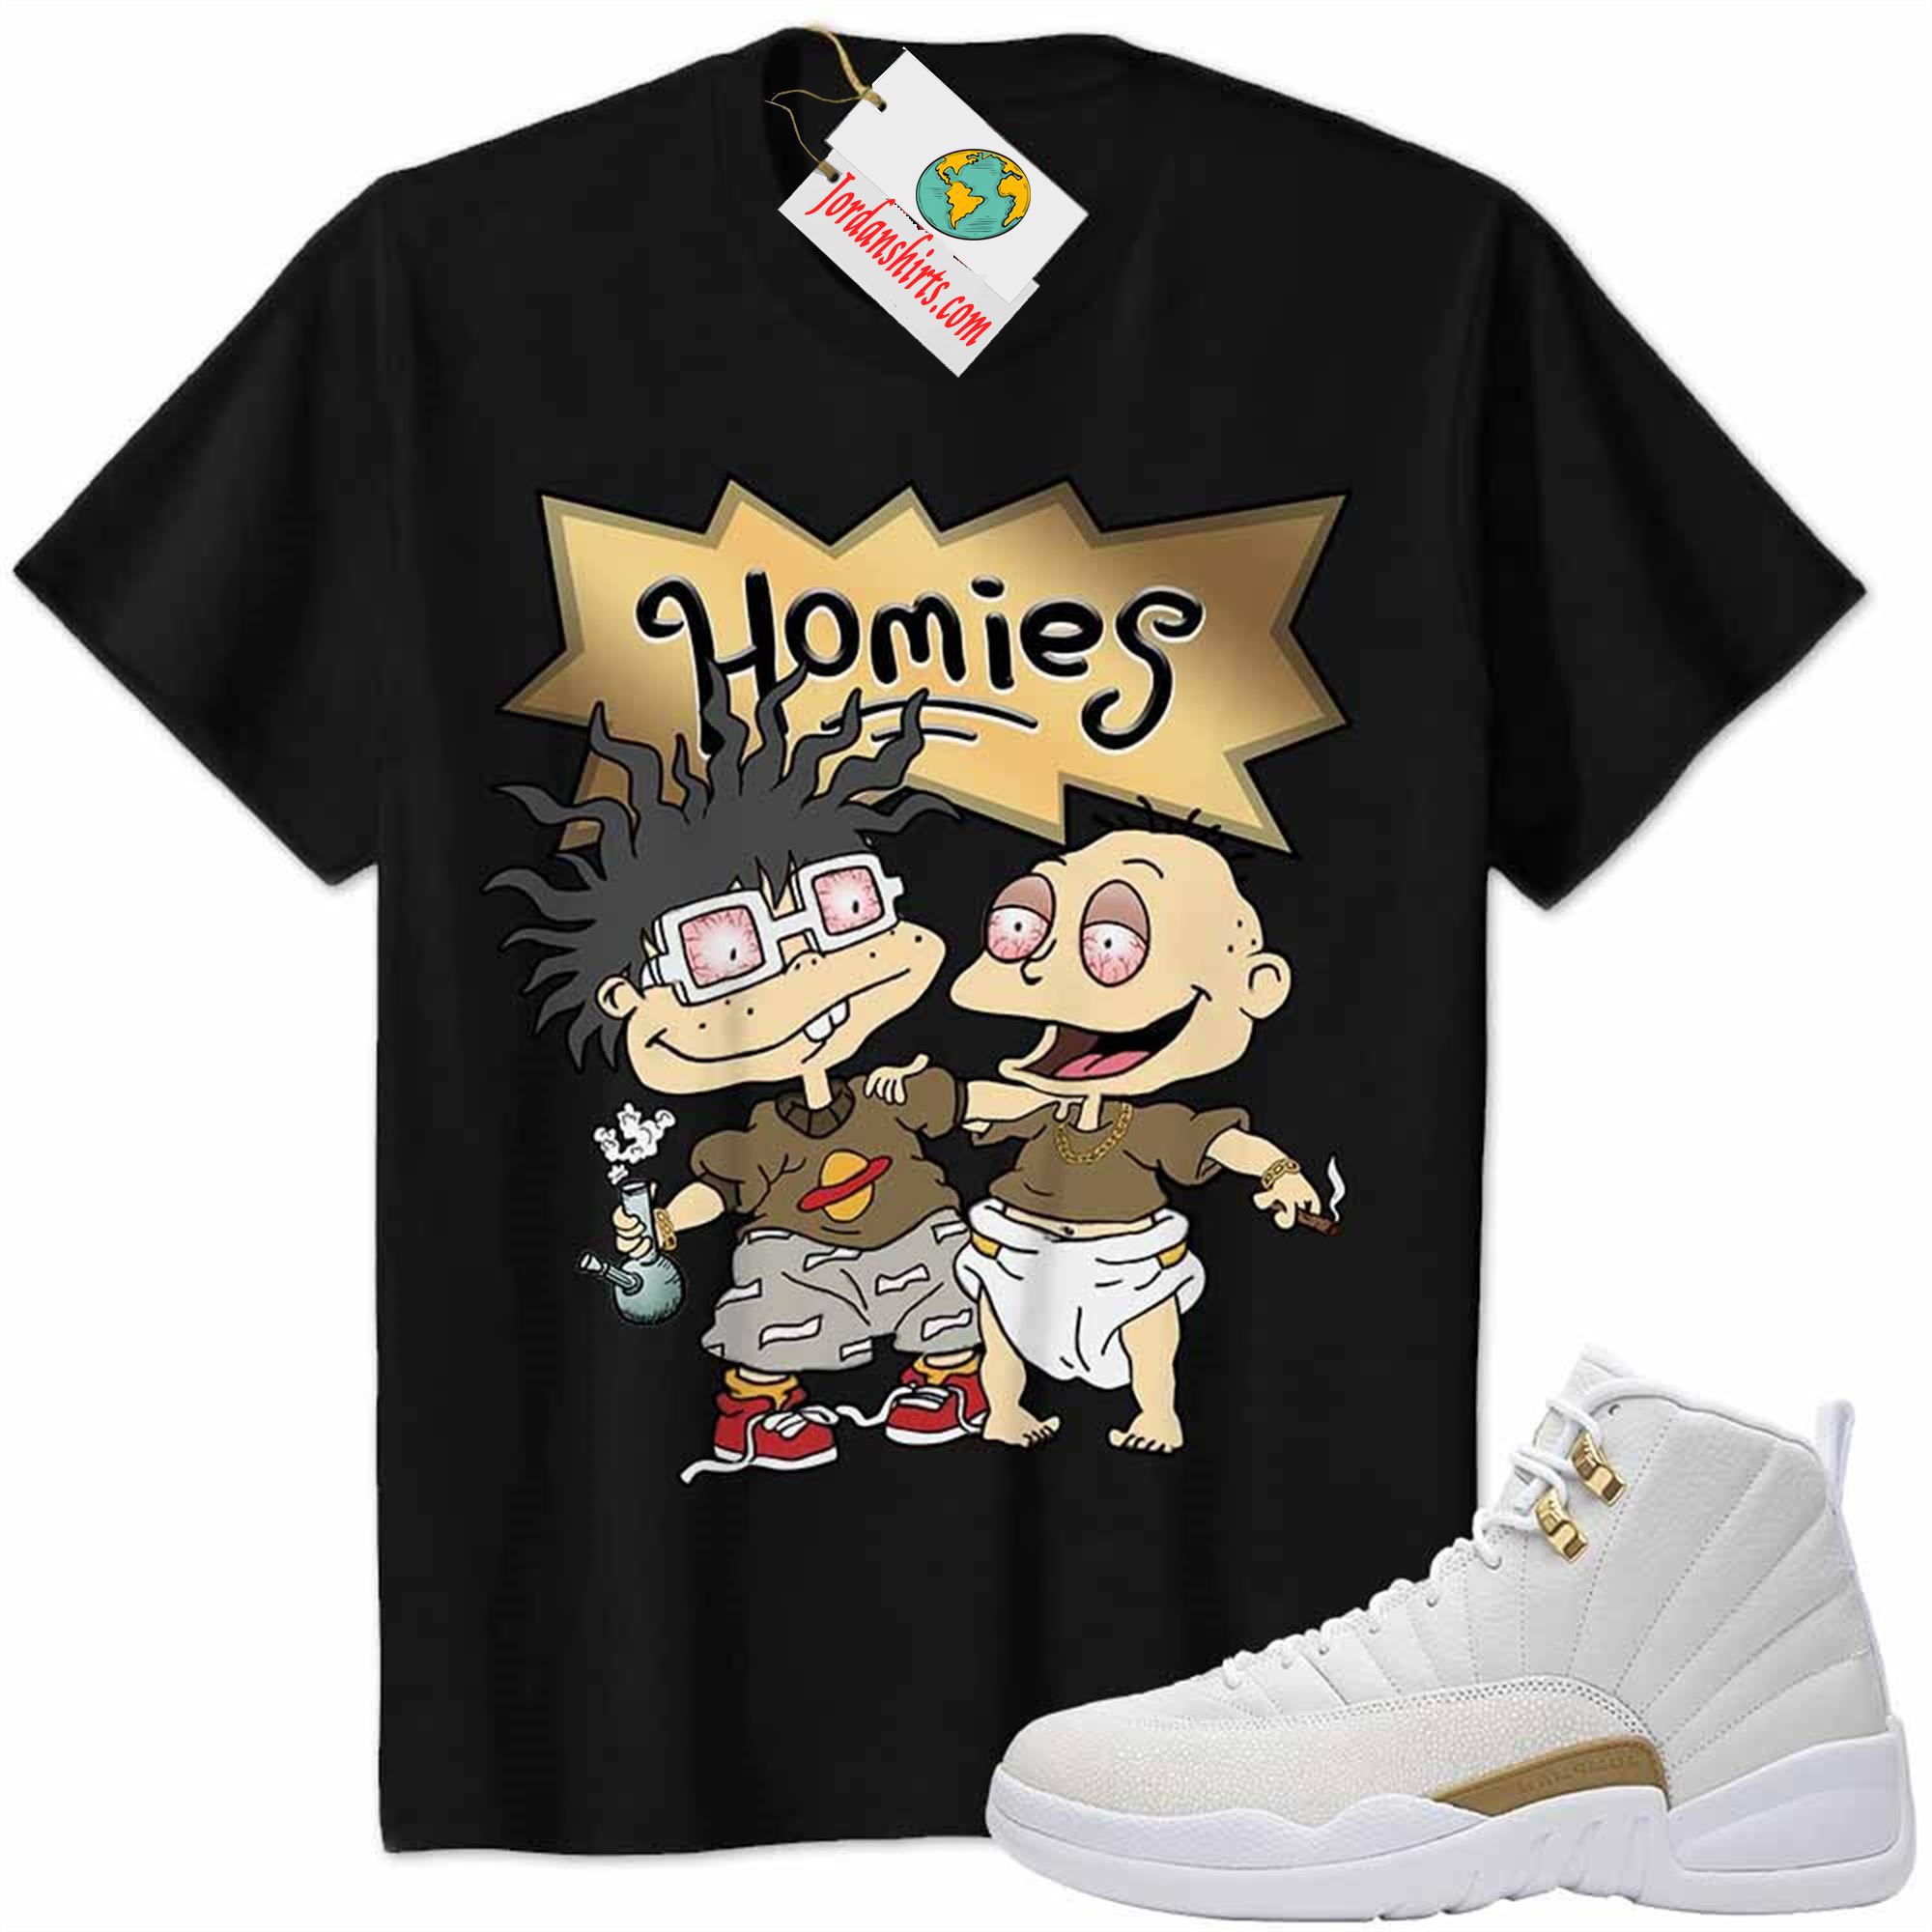 Jordan 12 Shirt, Jordan 12 Ovo Shirt Hommies Tommy Pickles Chuckie Finster Rugrats Black Plus Size Up To 5xl